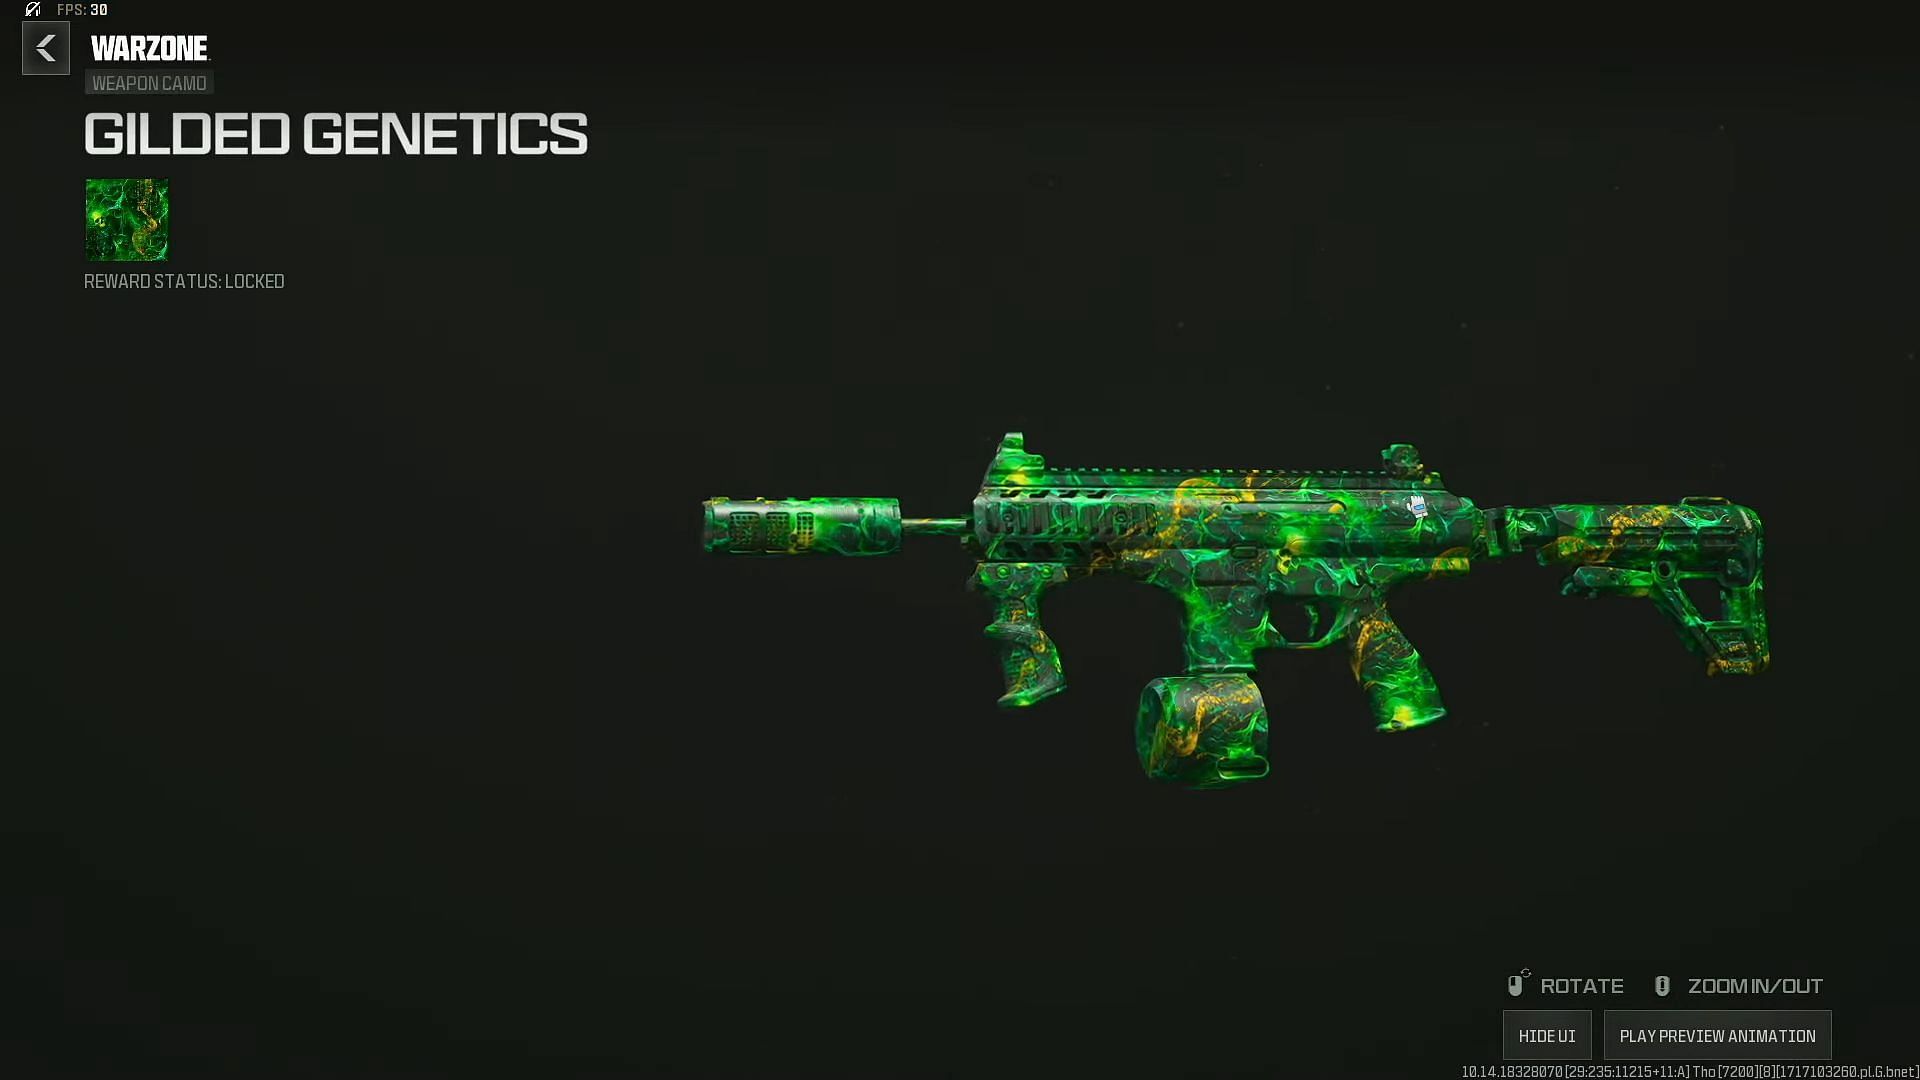 Gilded Genetics weapon camo (Image via Activision)